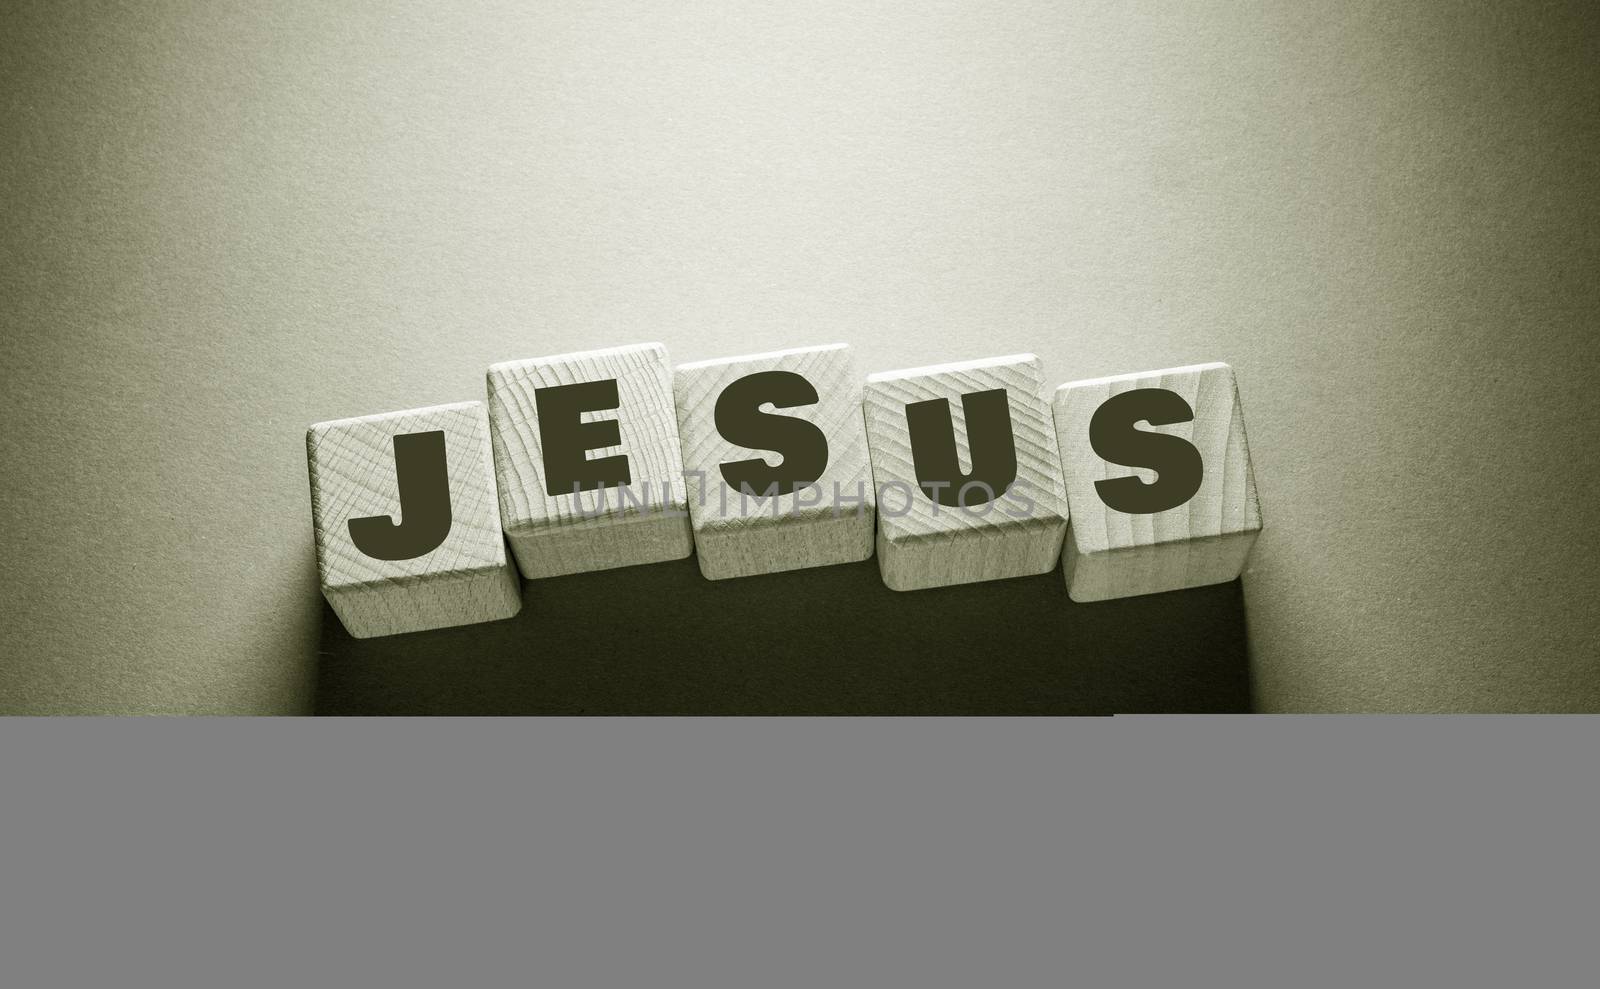 Jesus Word Written on Wooden Cubes